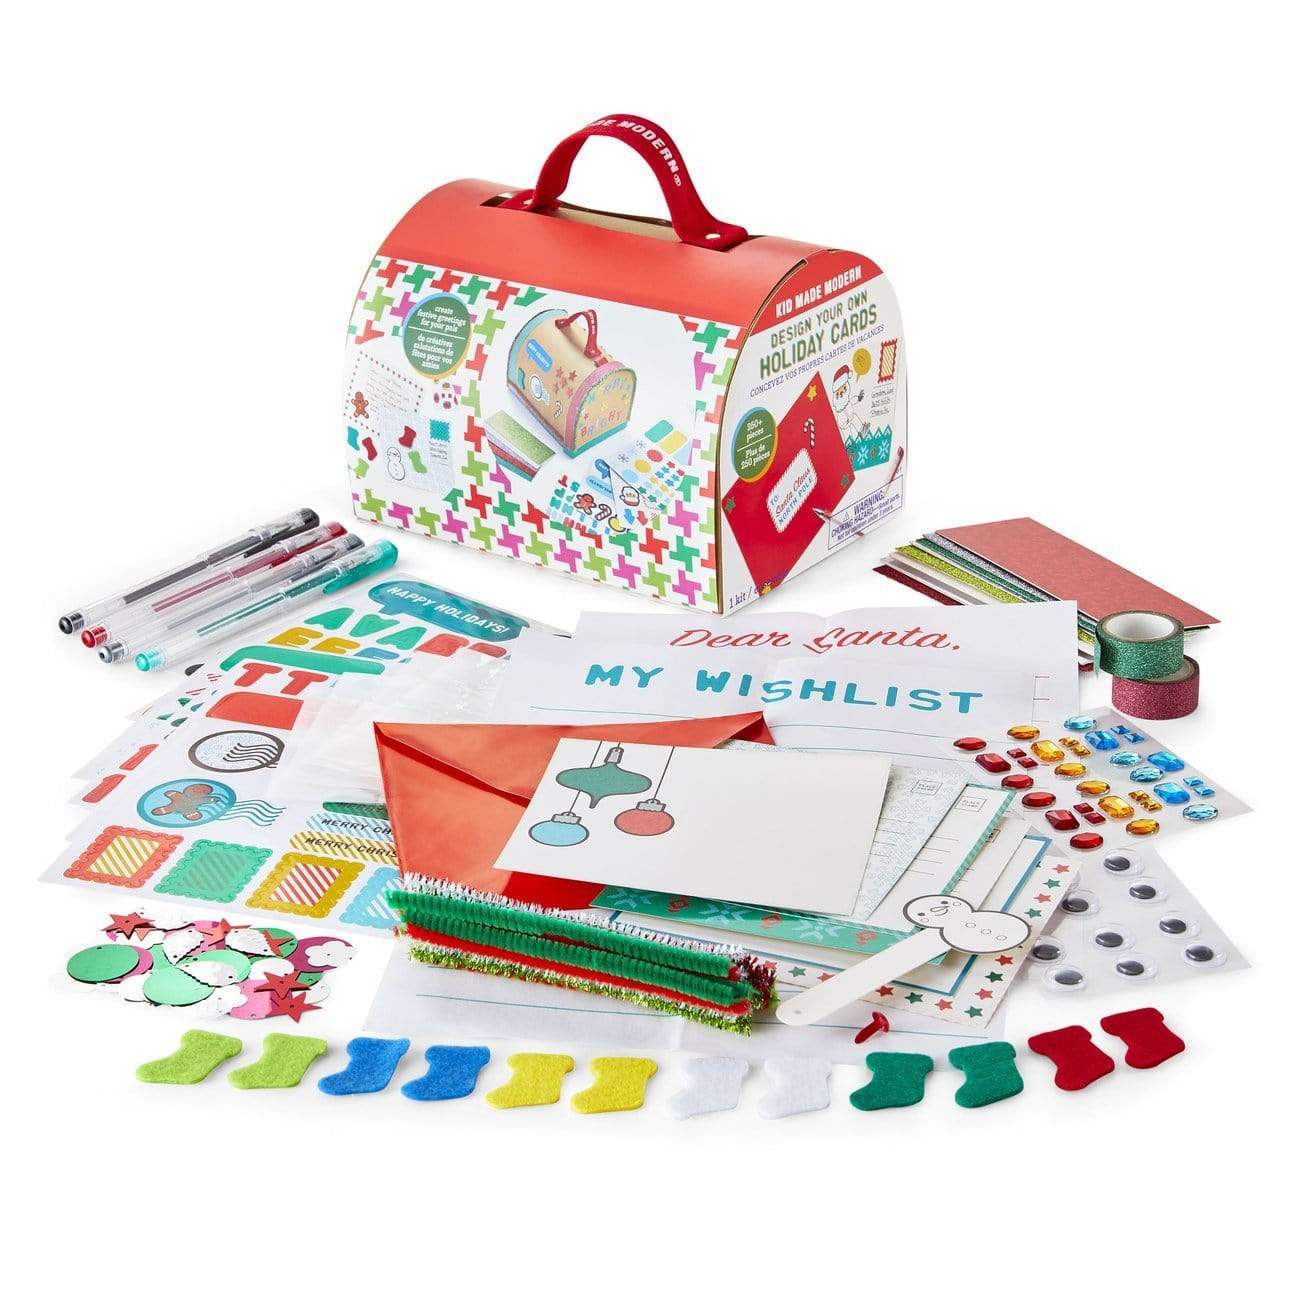 Design Your Own Holiday Cards Craft Kit - HoneyBug 